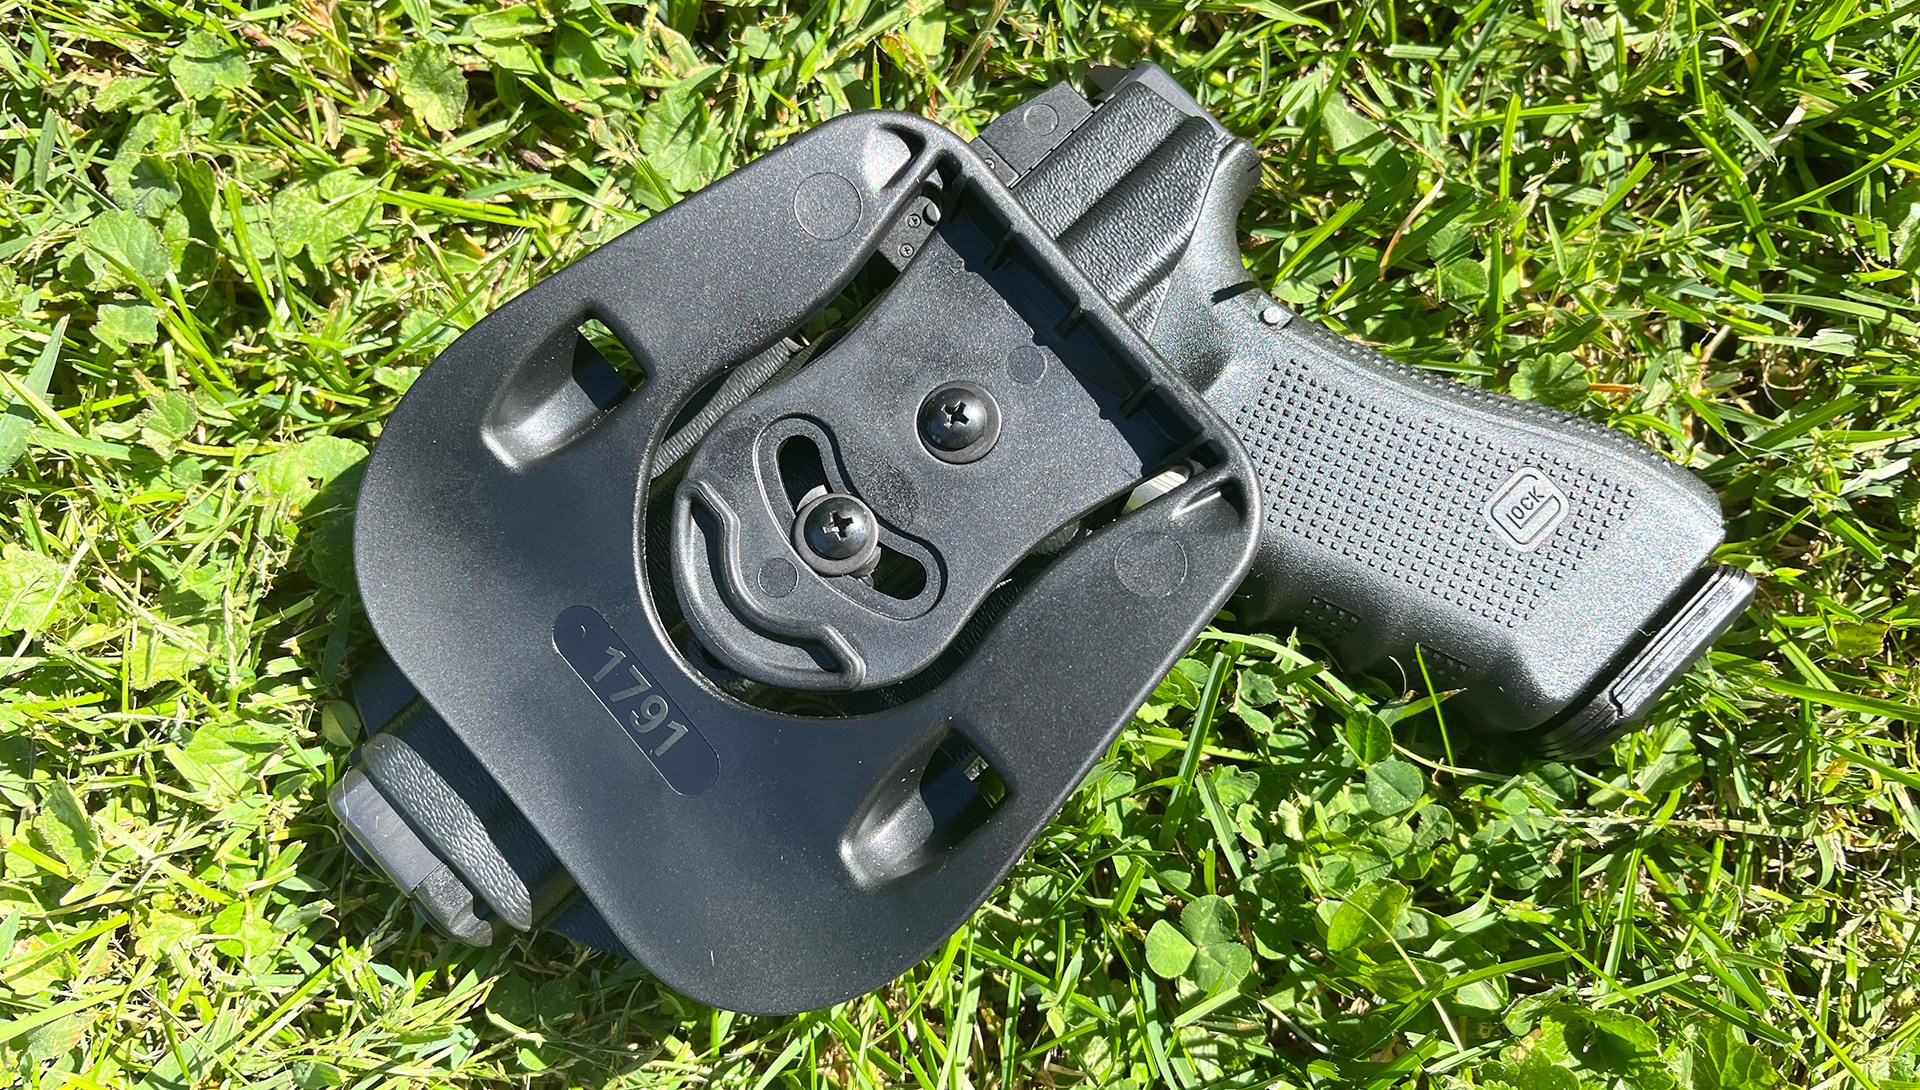 Rear of holster